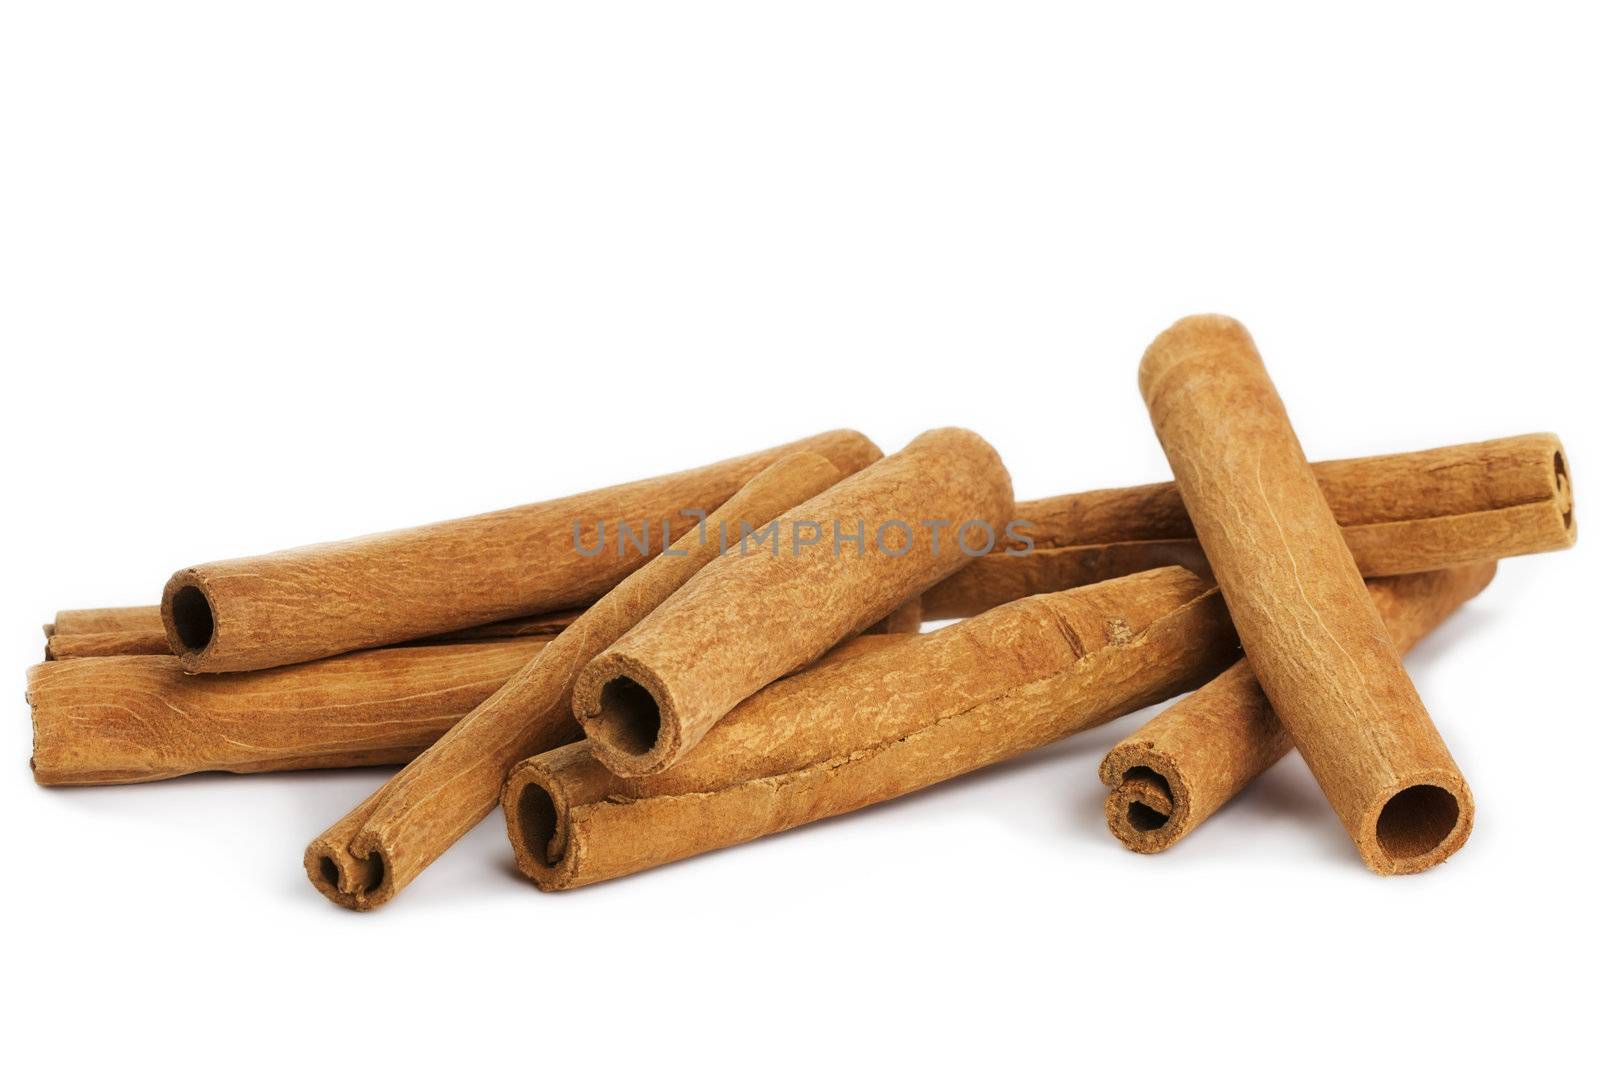 some cinnamon sticks by RobStark